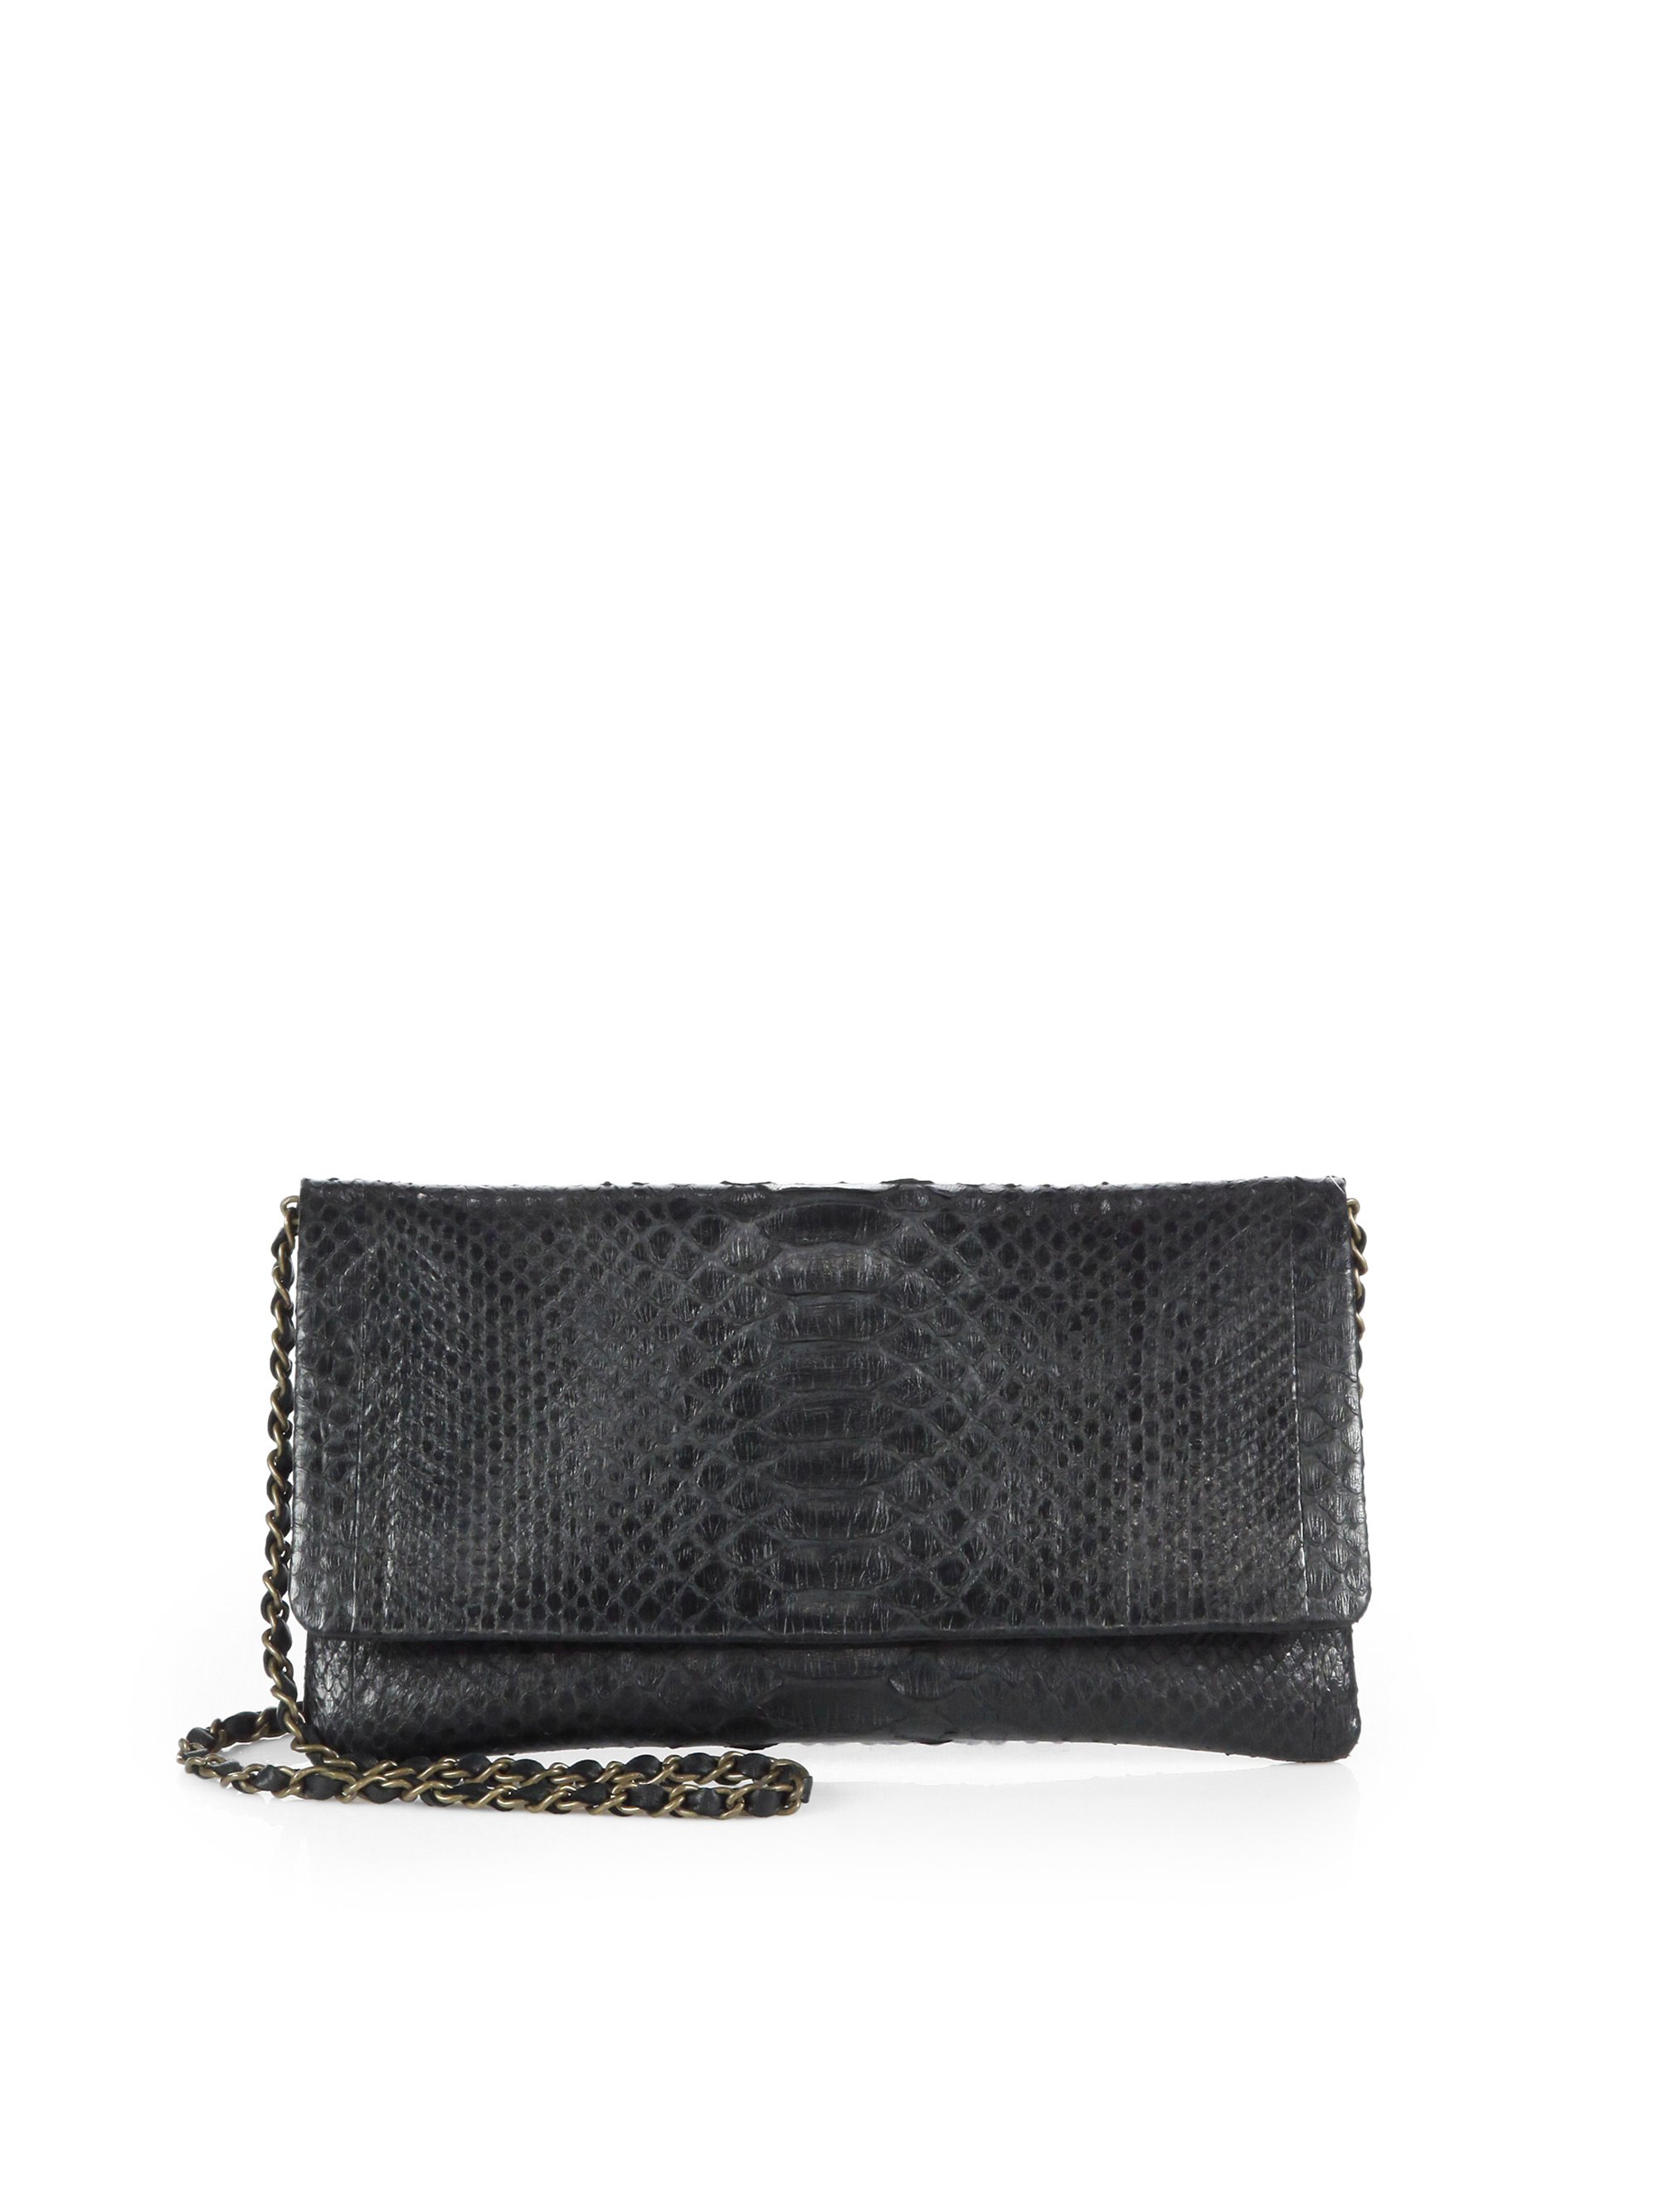 Beirn Python Convertible Wallet Crossbody Bag in Black